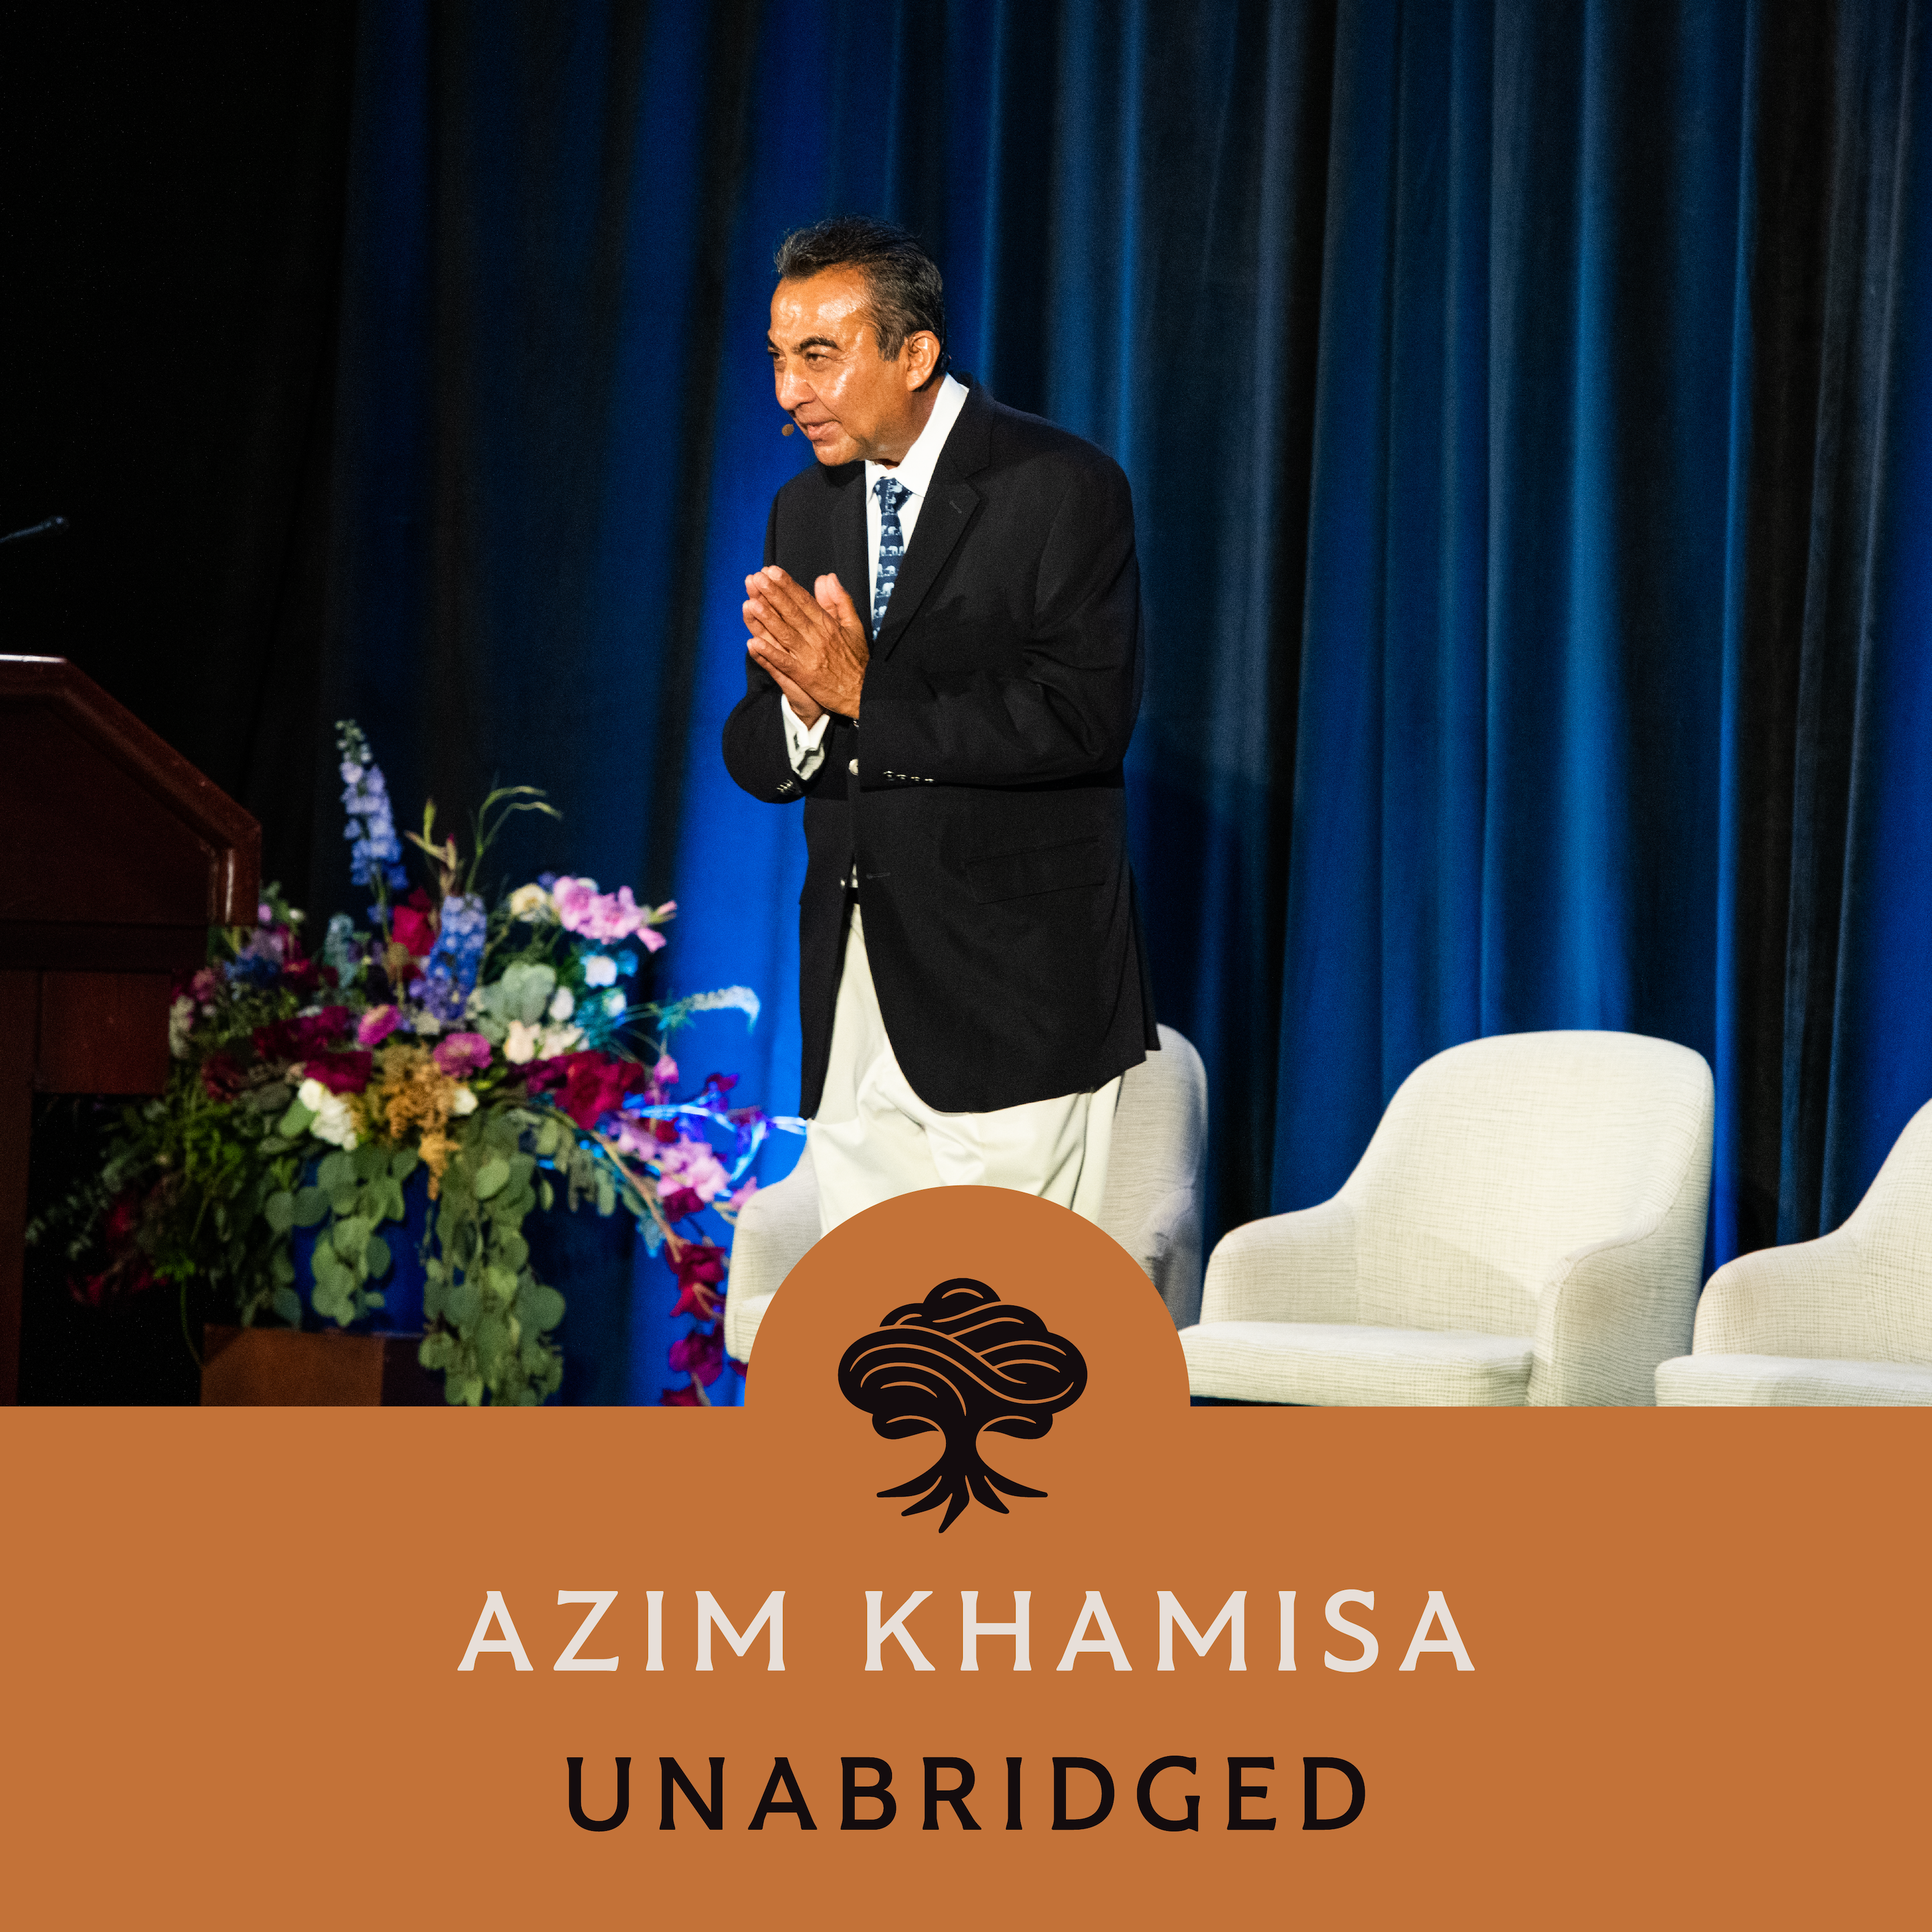 Thumbnail for "150: Unabridged Interview: Azim Khamisa".